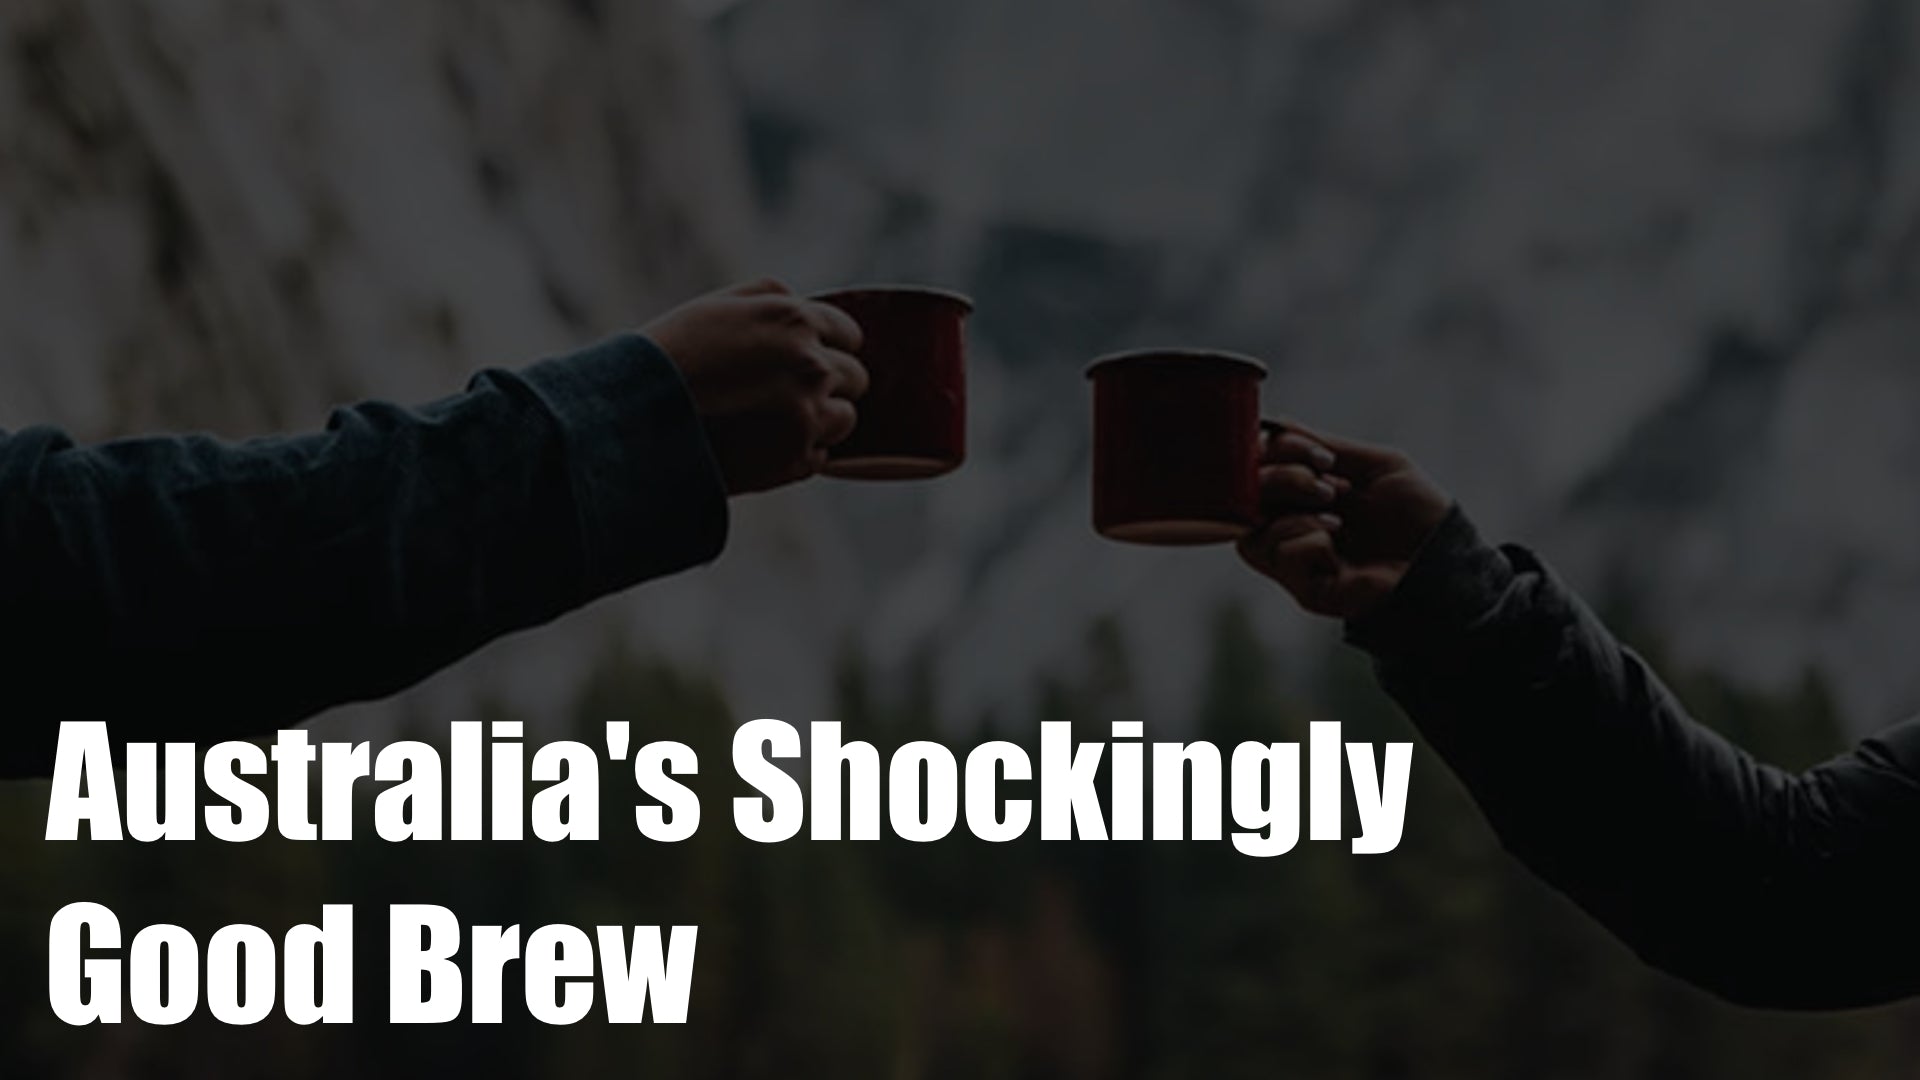 Australia's Shockingly Good Brew